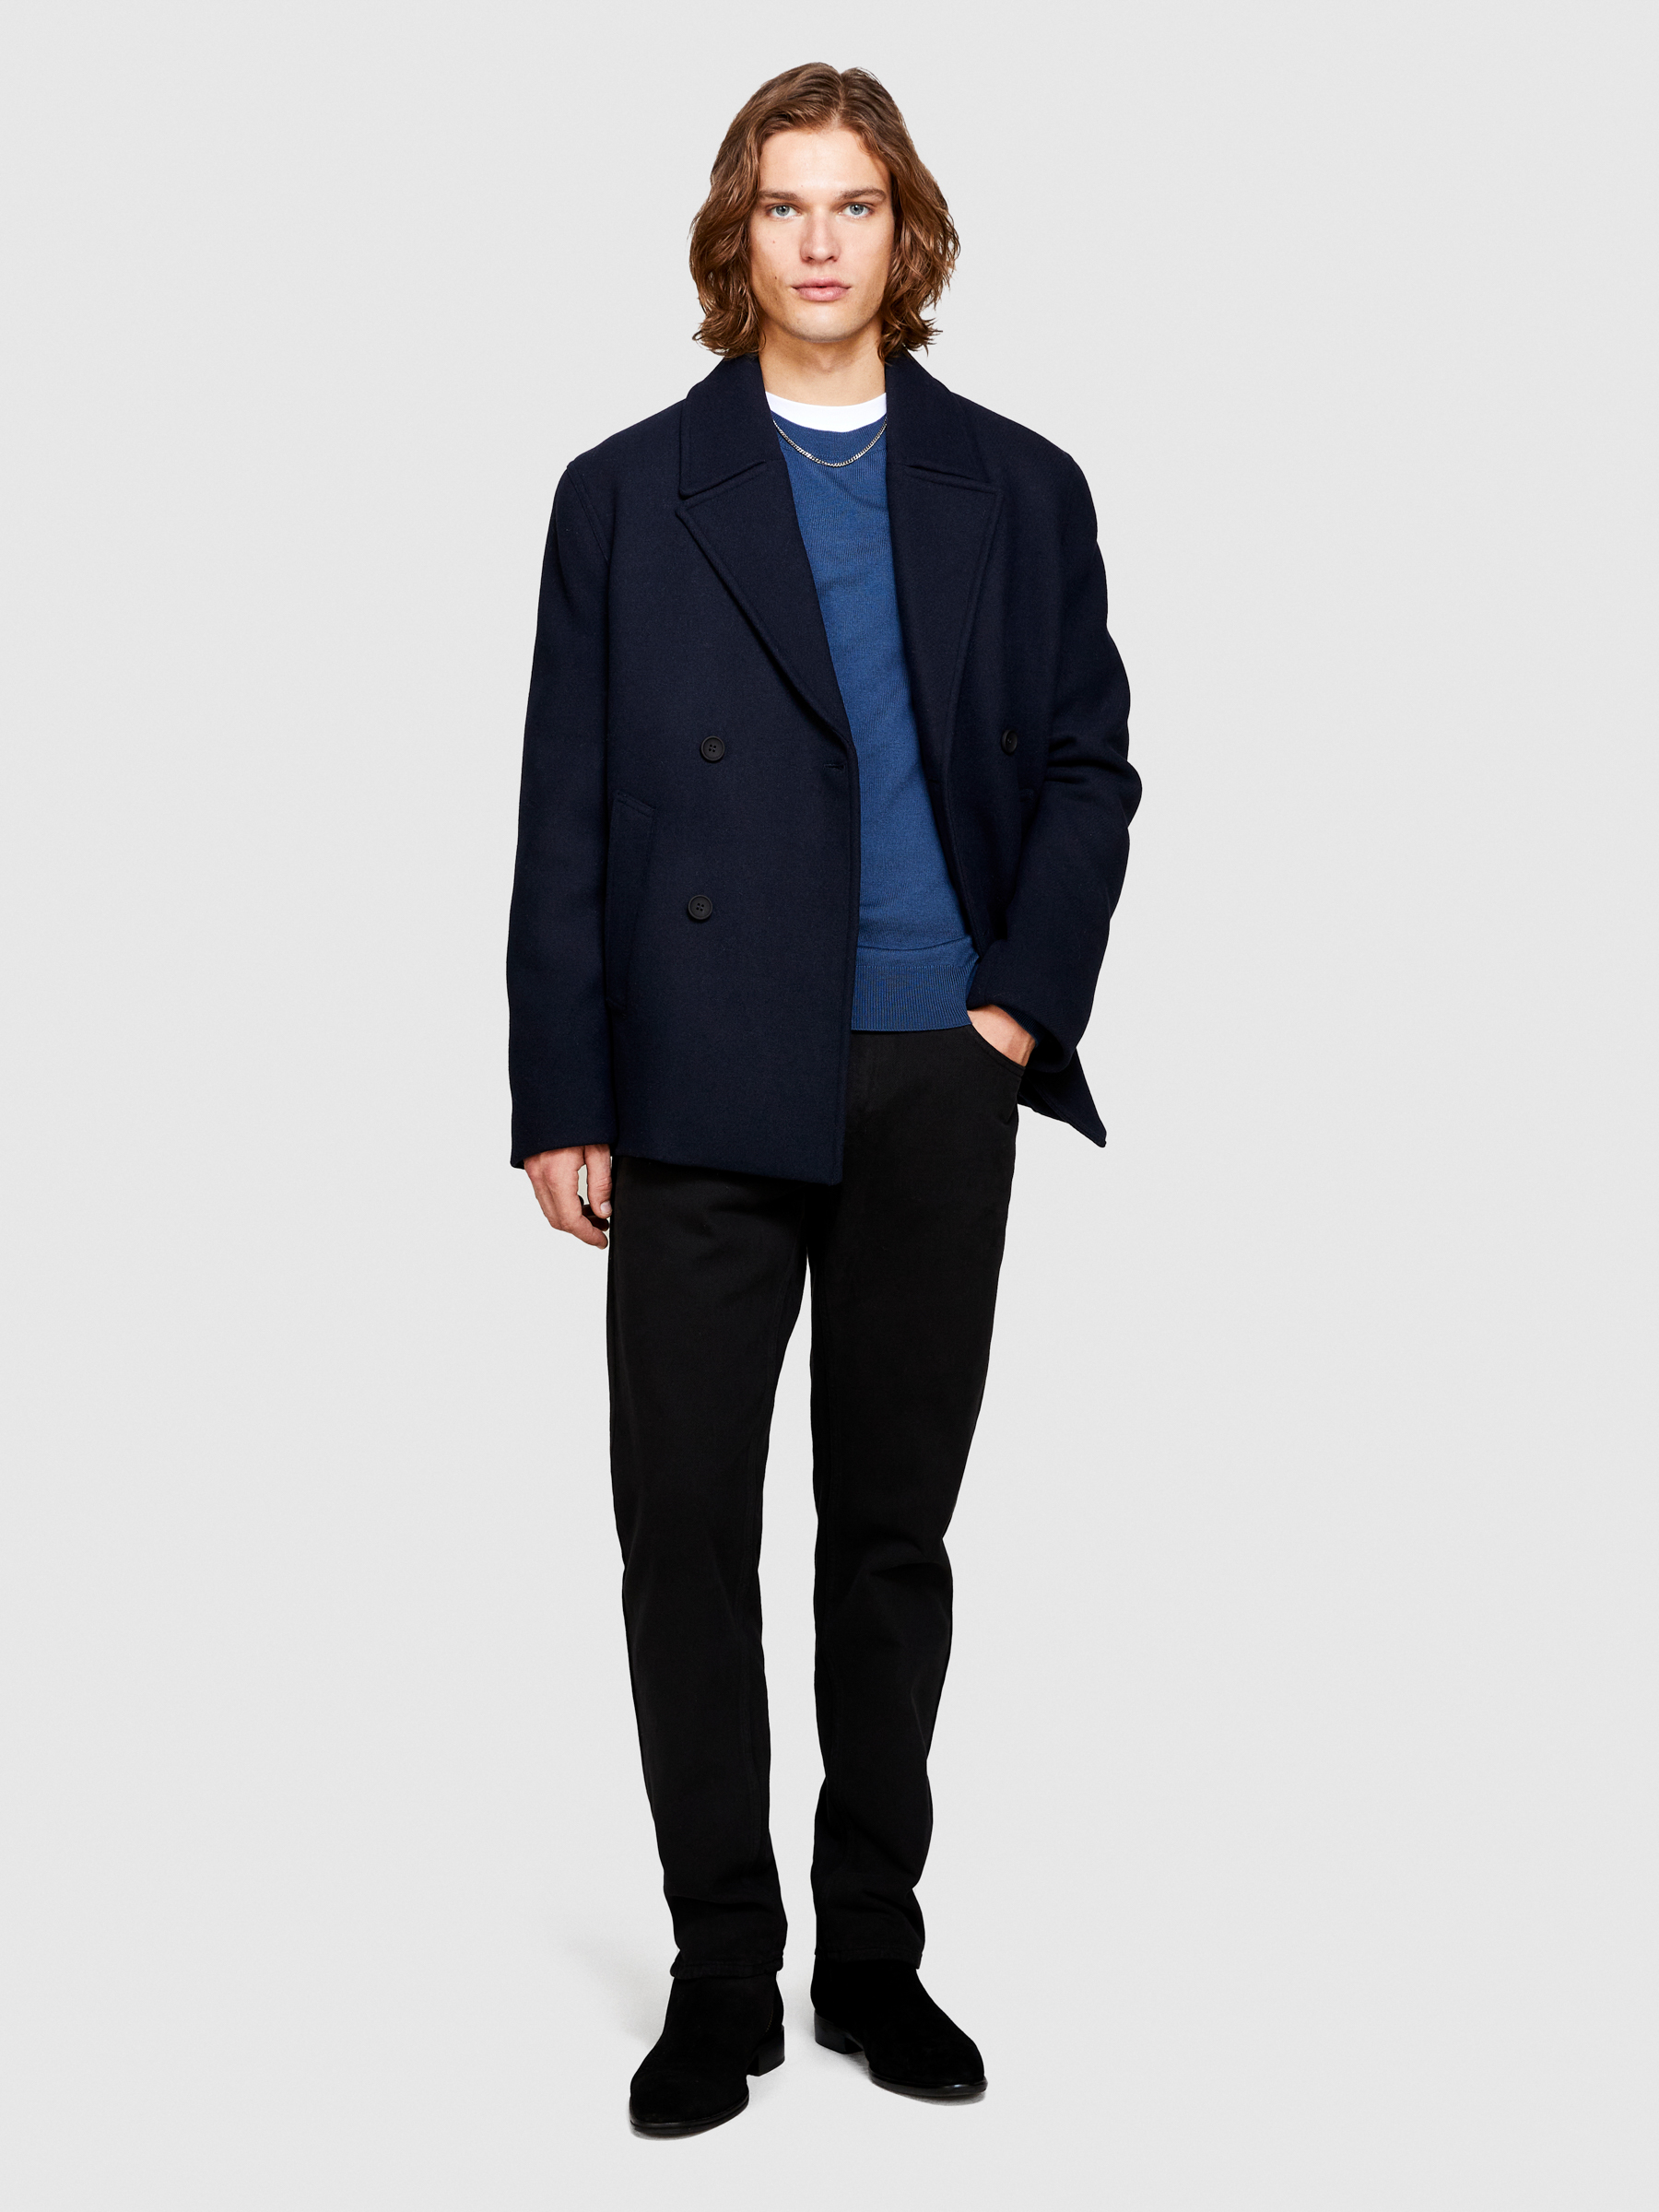 Sisley - Slim Fit Crew Neck Sweater, Man, Dark Blue, Size: XL